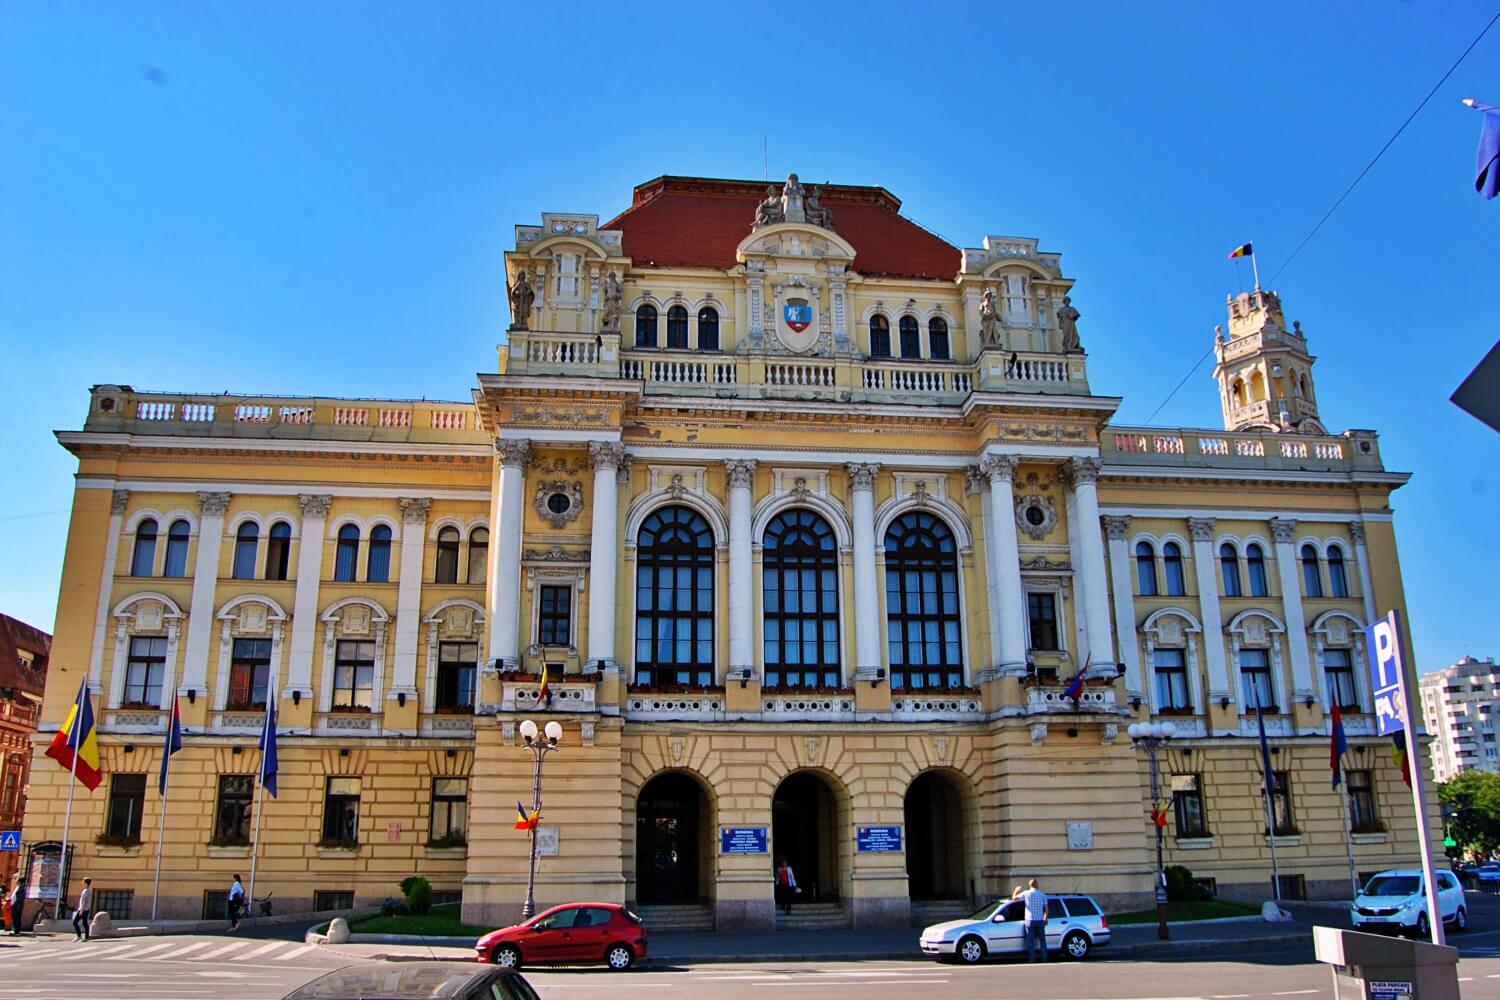 The City Hall Palace of Oradea